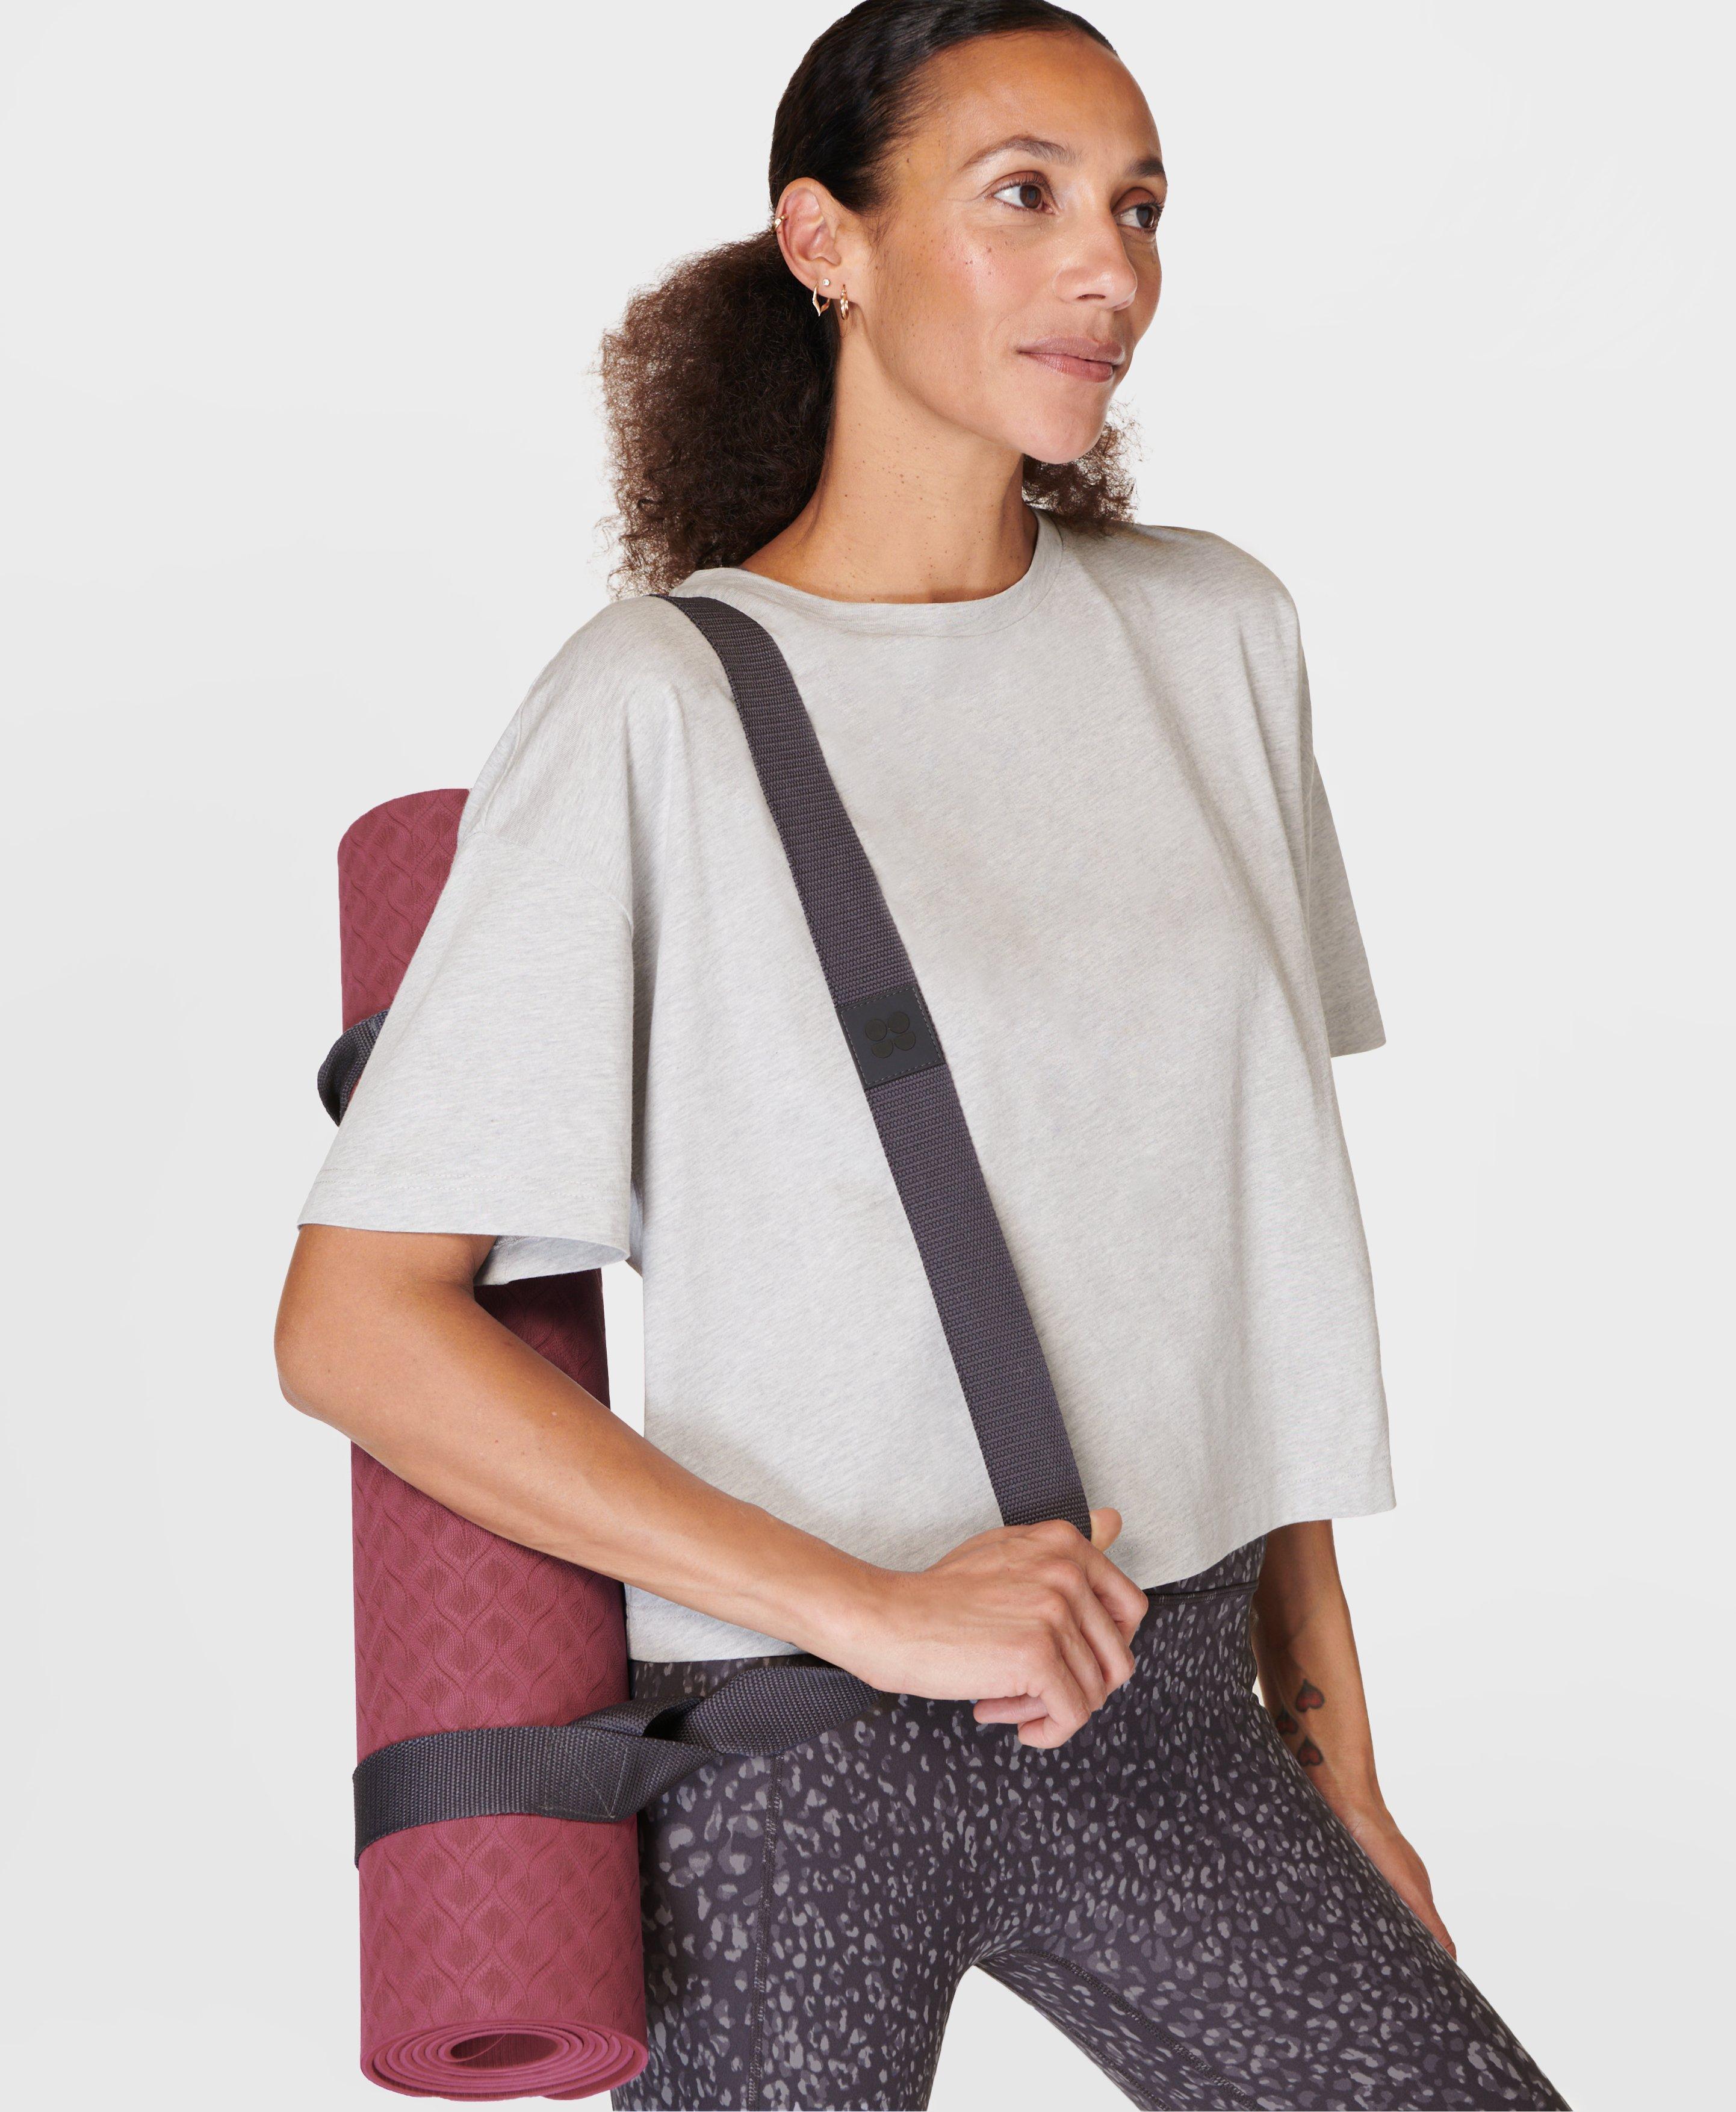 Yoga Mat Carry Strap - Urban Grey, Women's Fitness Equipment